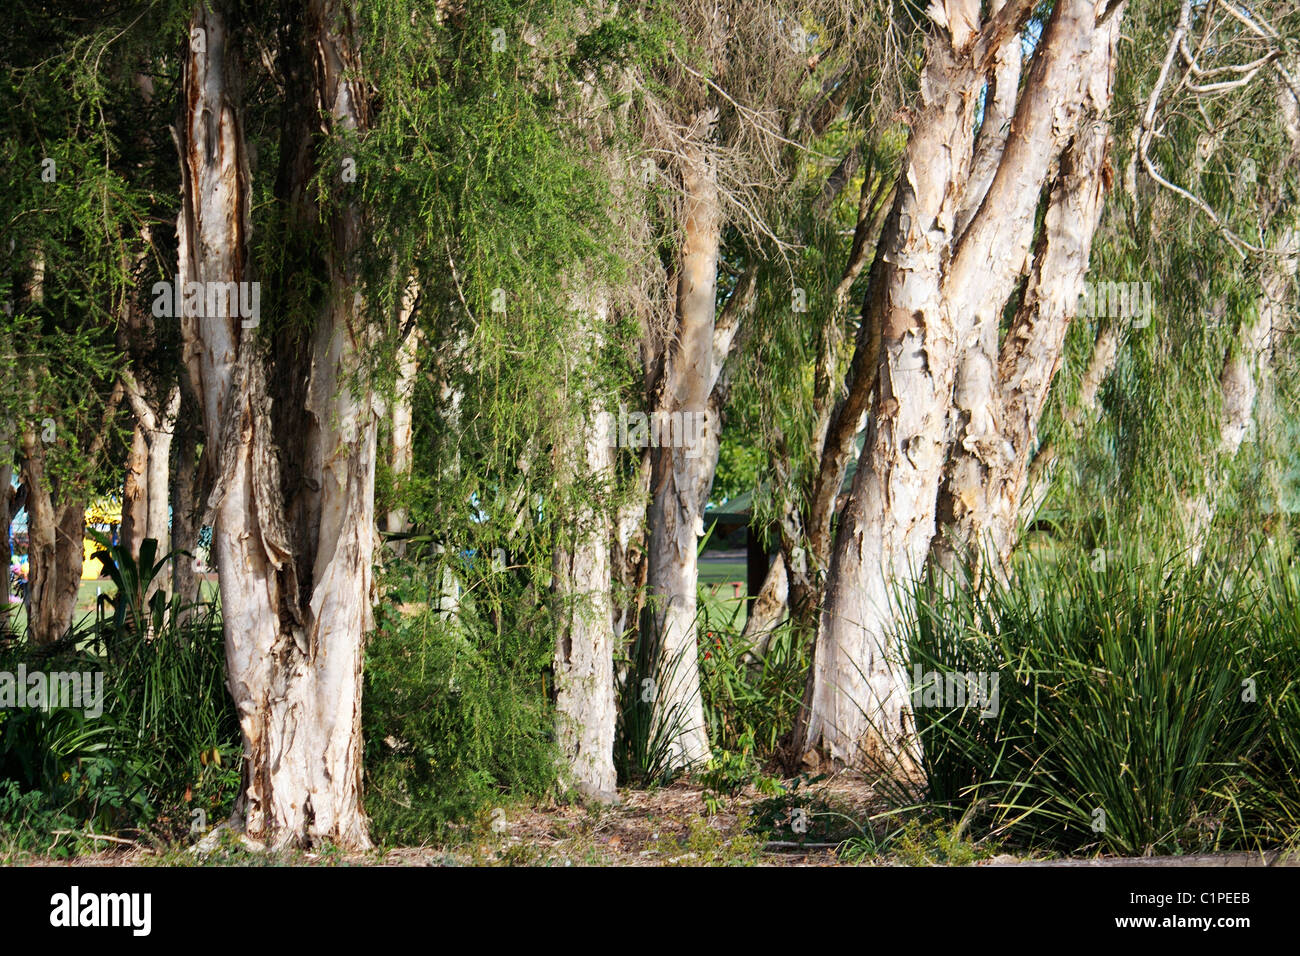 Australia, New South Wales, Murwillumbah, peeling trunks of melaleuca trees Stock Photo